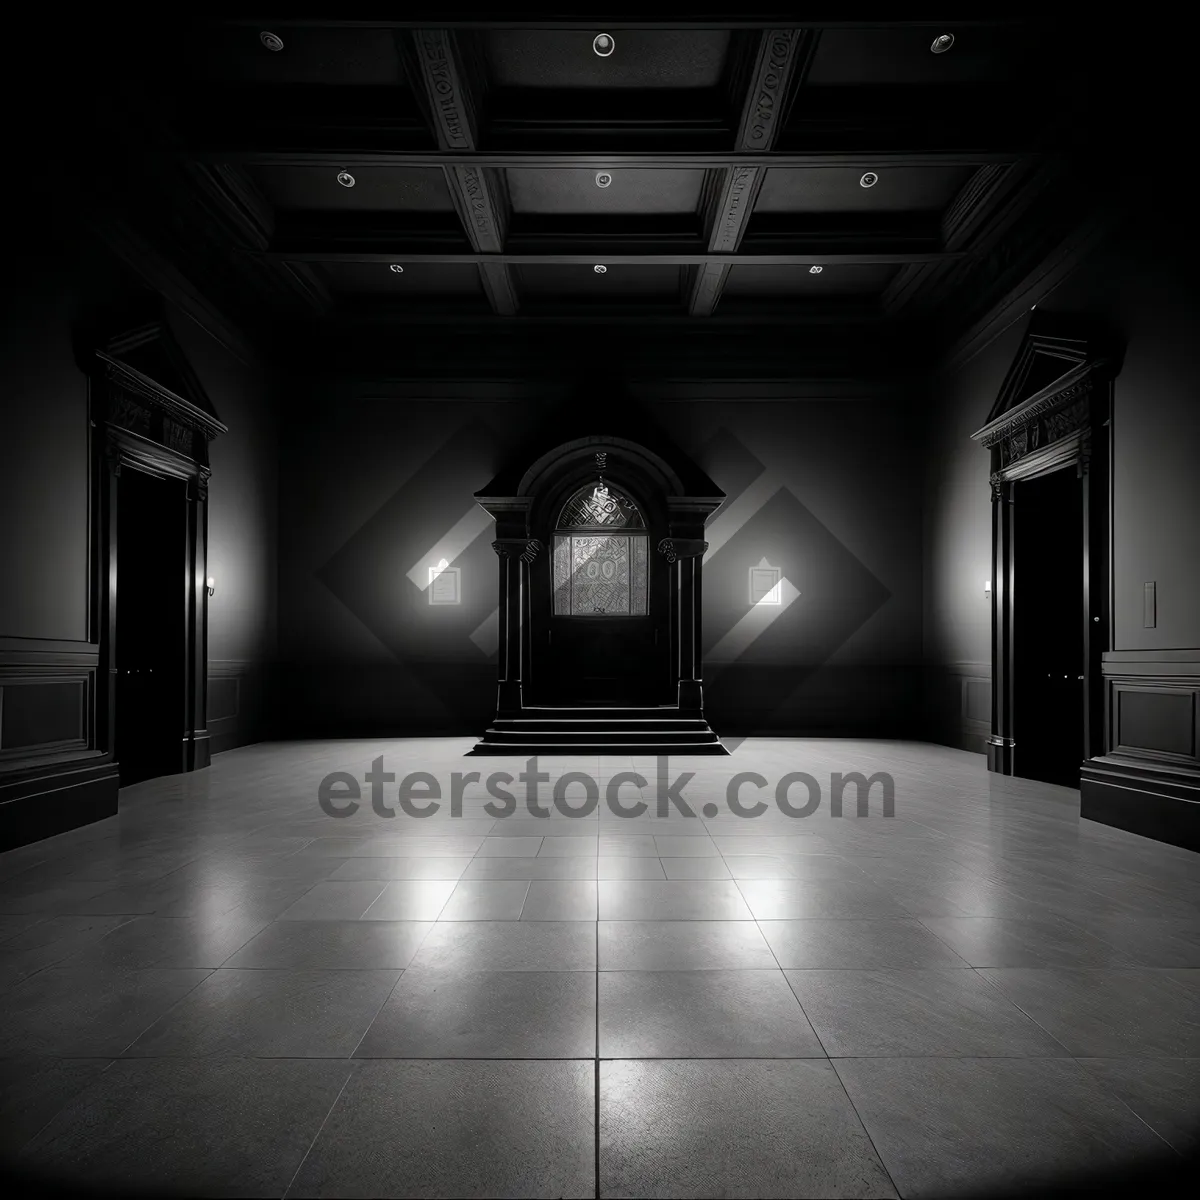 Picture of Sleek Modern Hallway with Stylish Interior Design